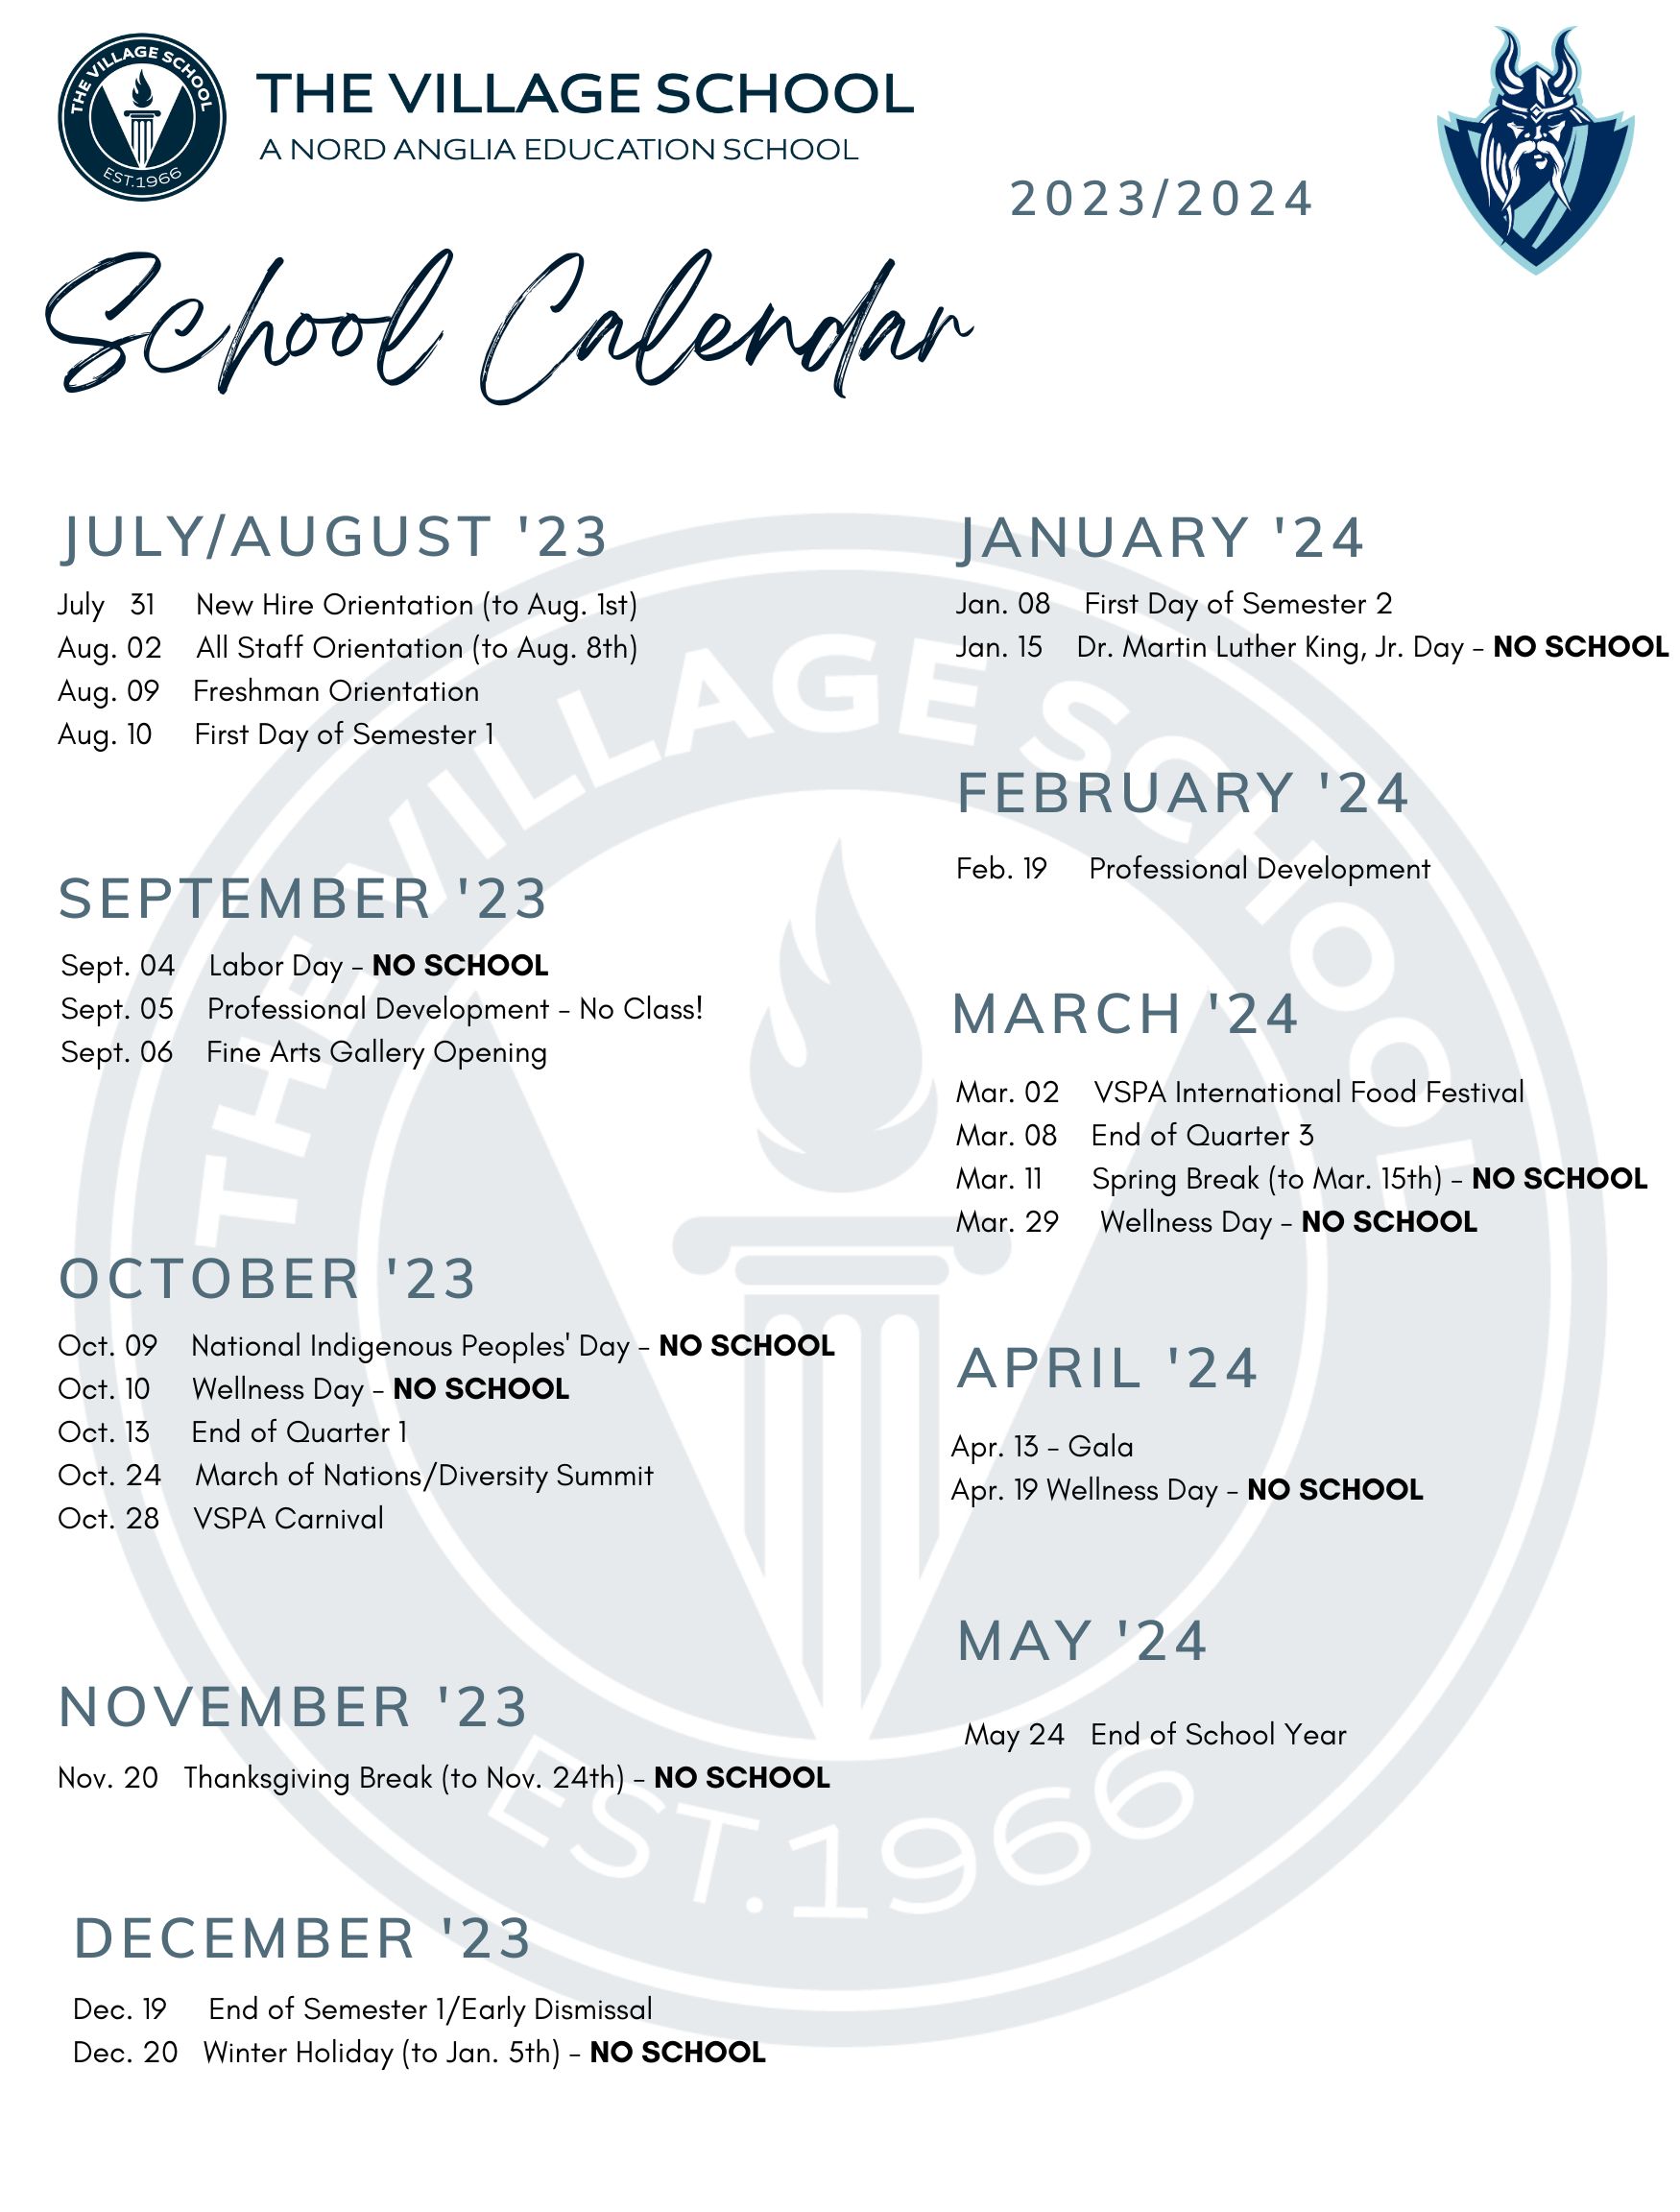 2023-2024 The Village School Calendar